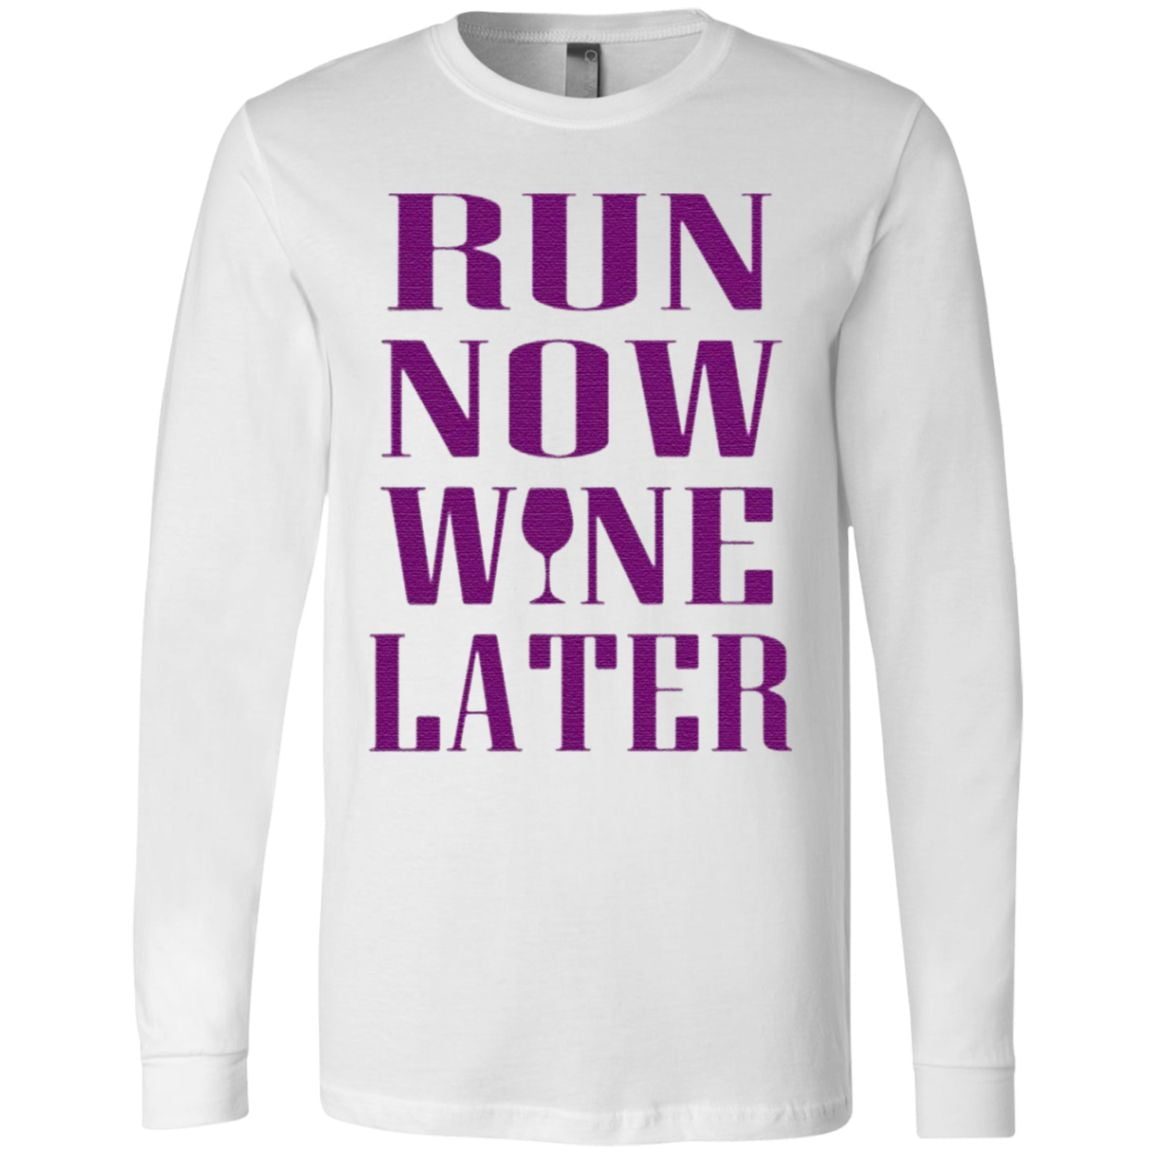 Run now wine later t shirt